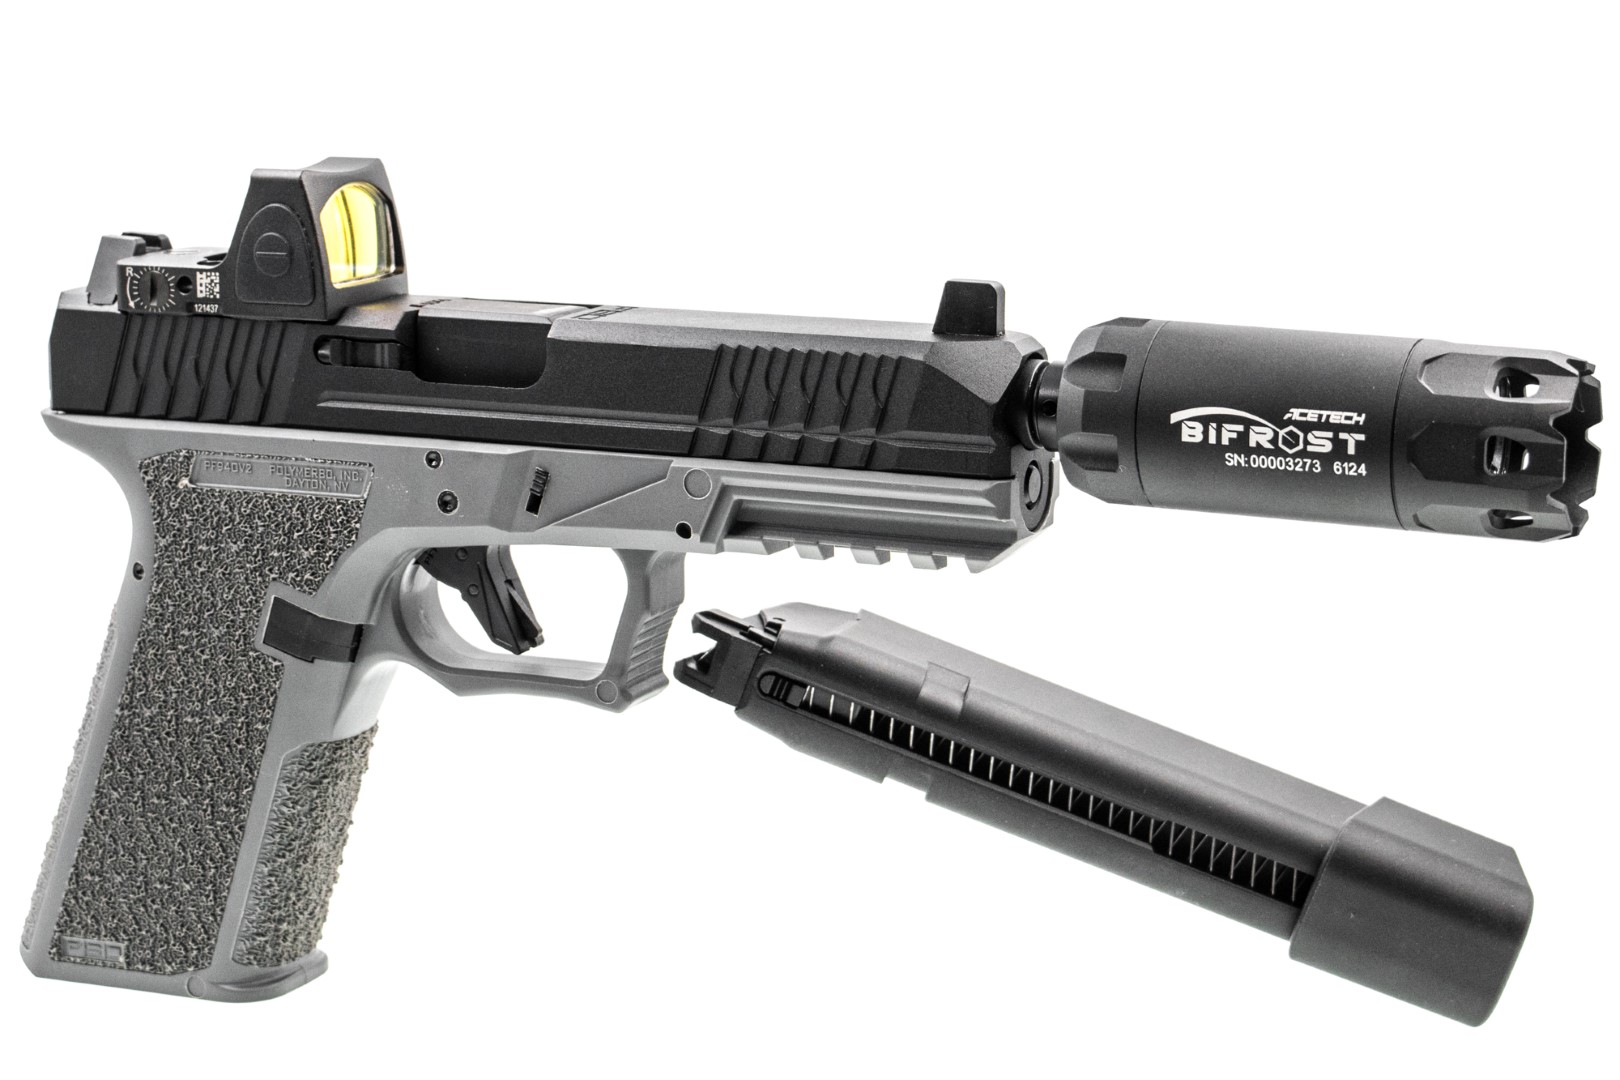 JDG Polymer80 Licensed P80 PFS9 ( RMR Cut ) Airsoft GBB Pistol